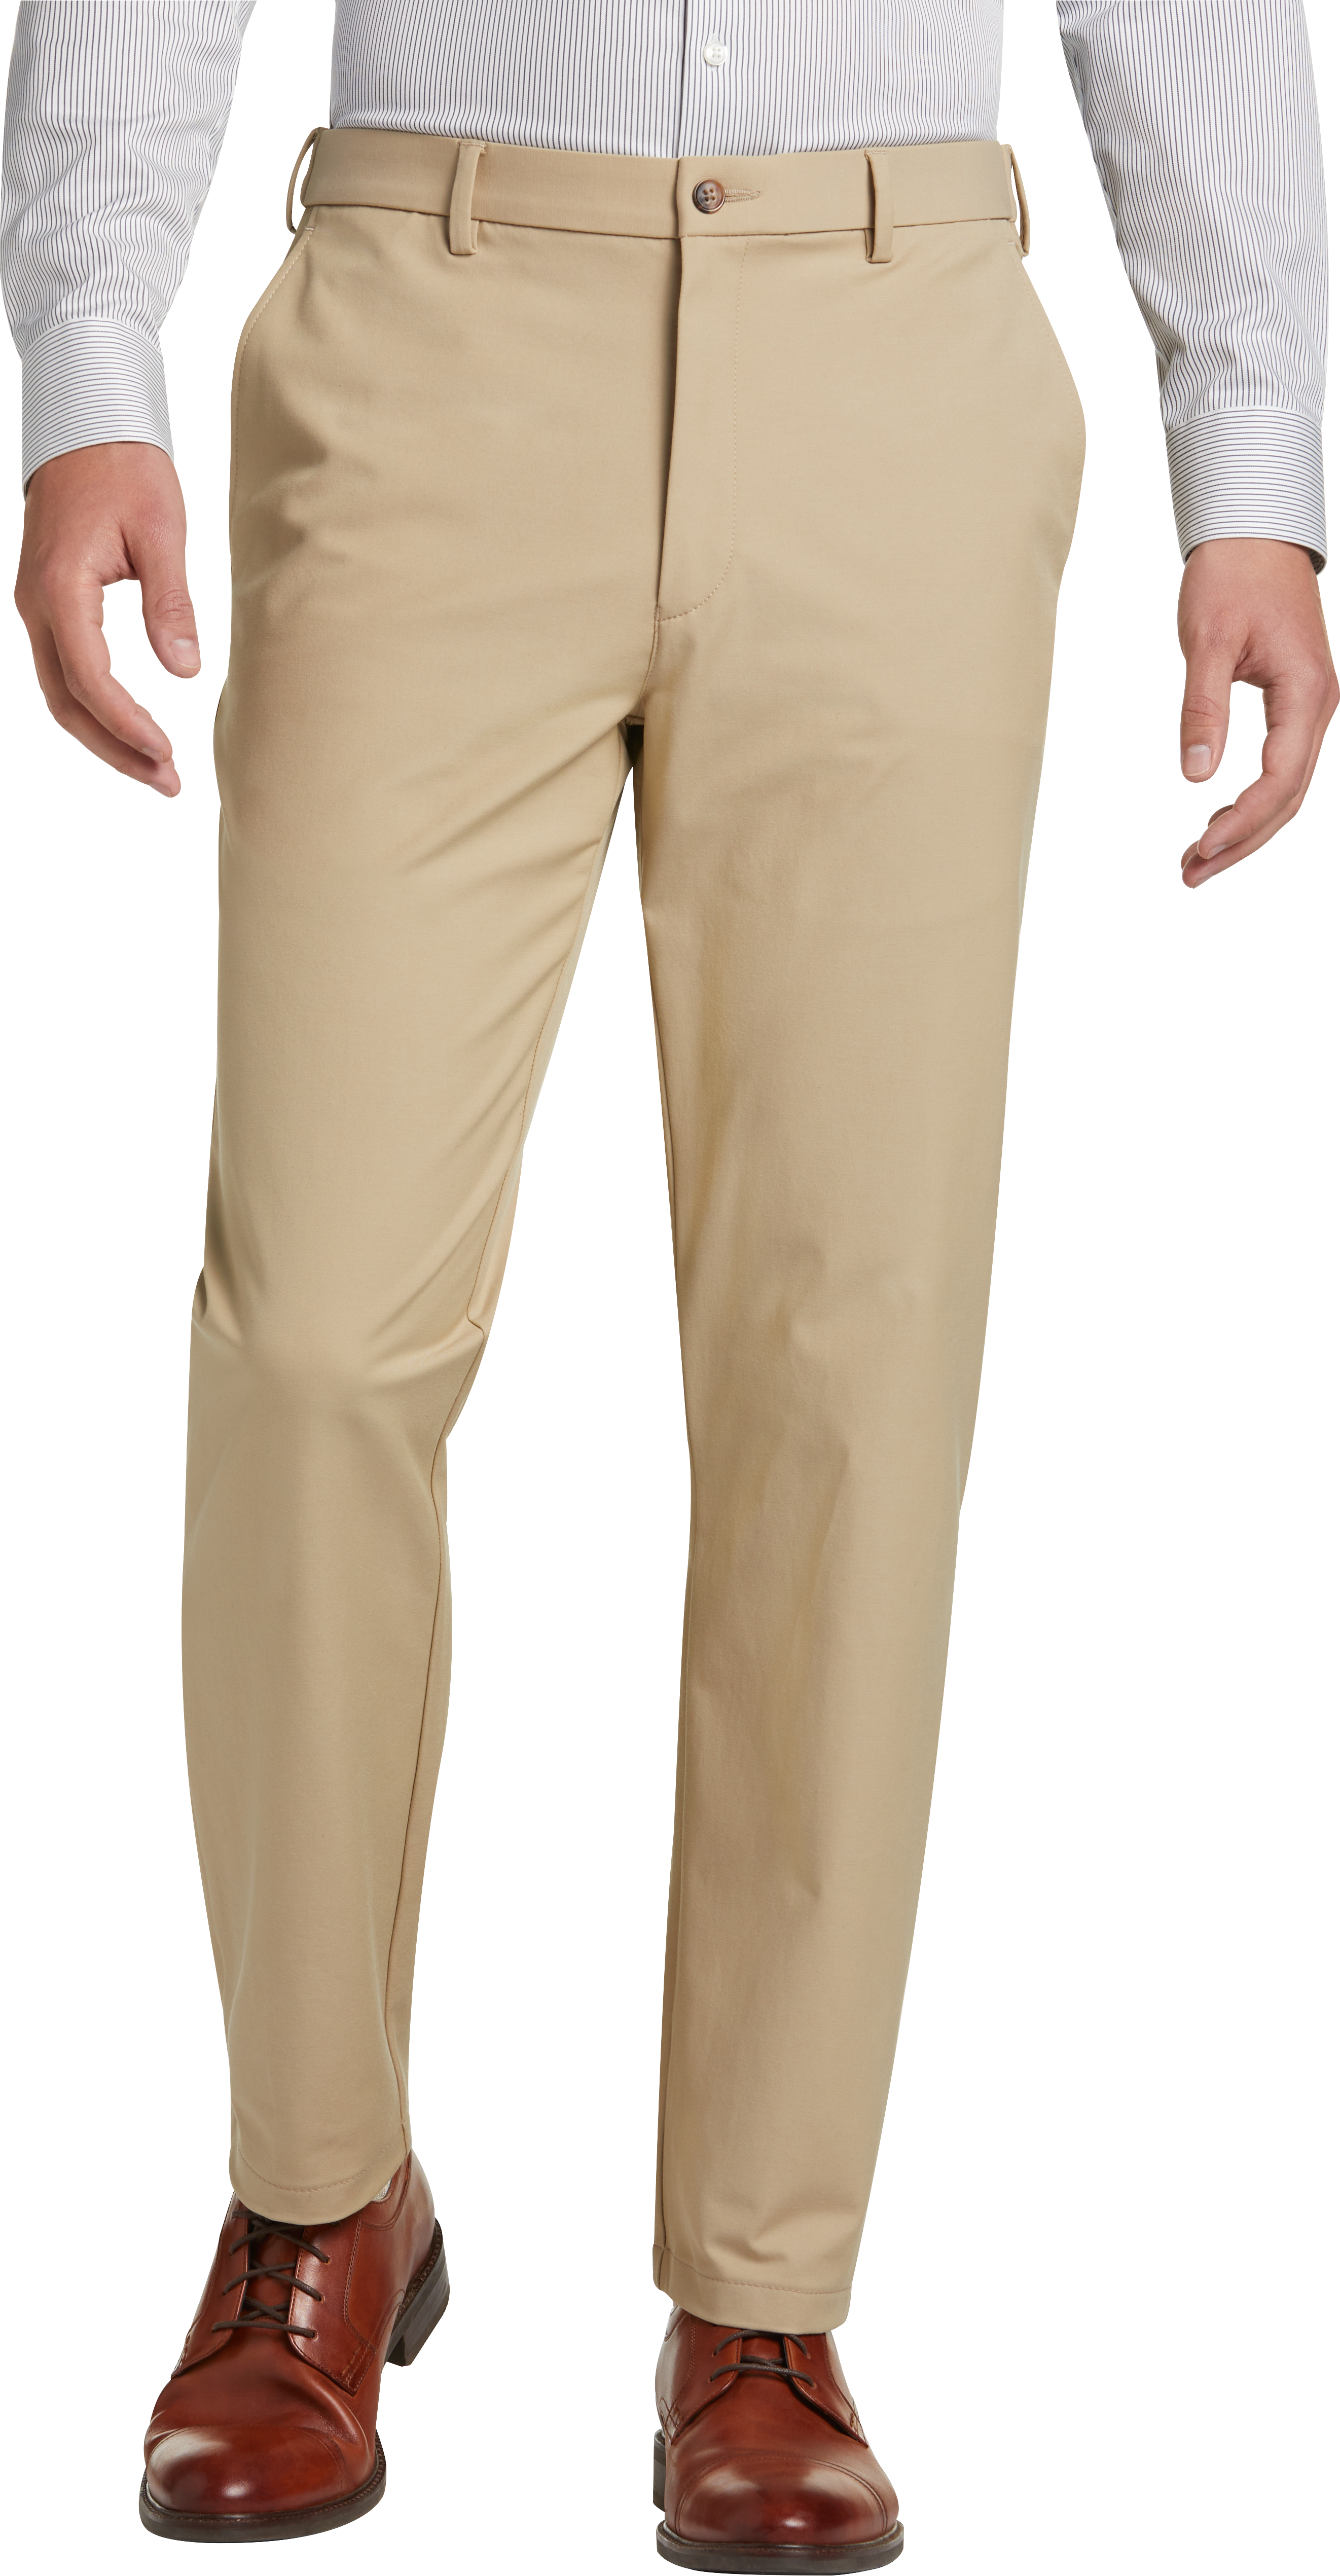 Men's Dark Charcoal Twill Classic Fit Suit Pants